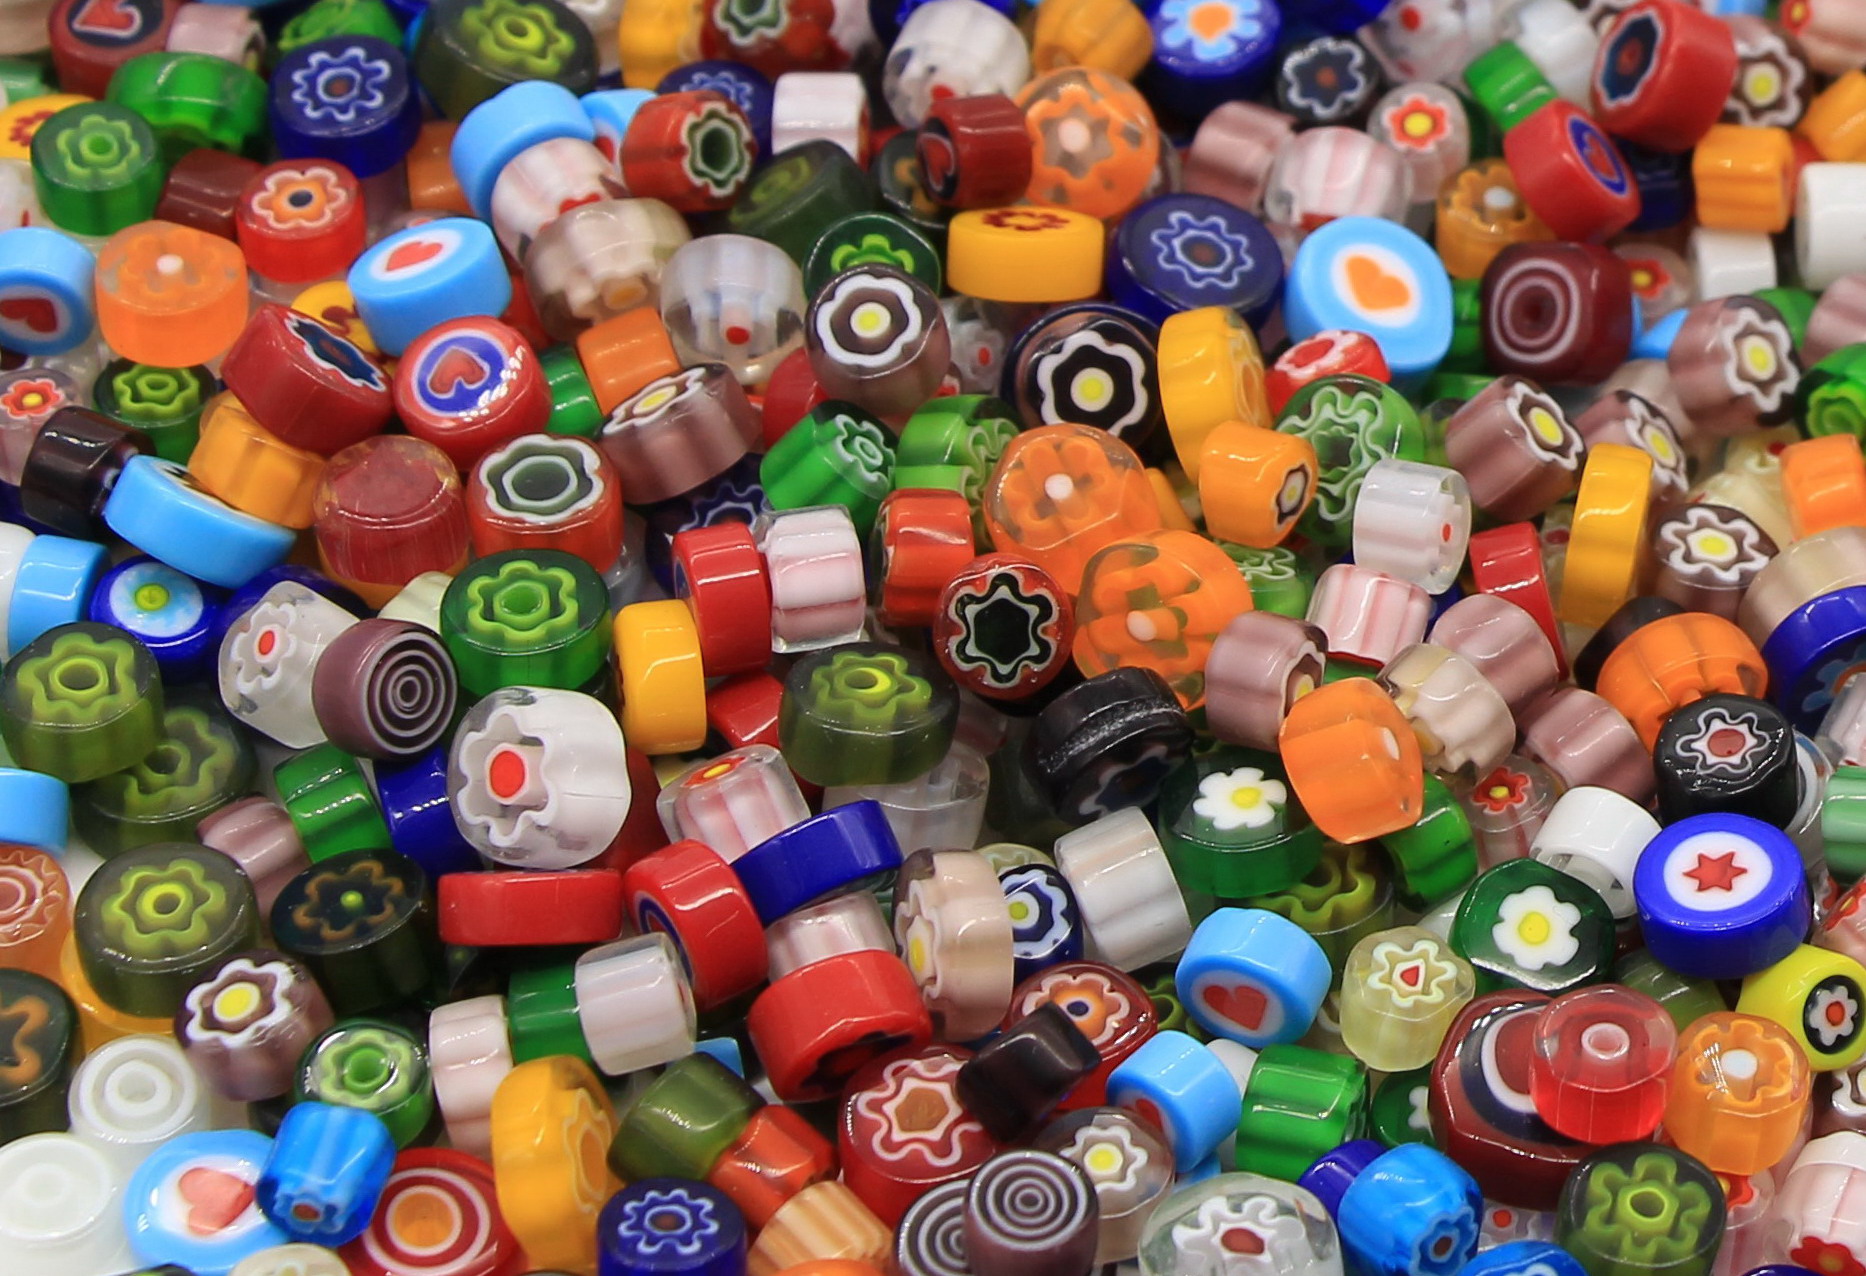 wholesale mosaic diy materials round millefiori glass beads for jewelry making